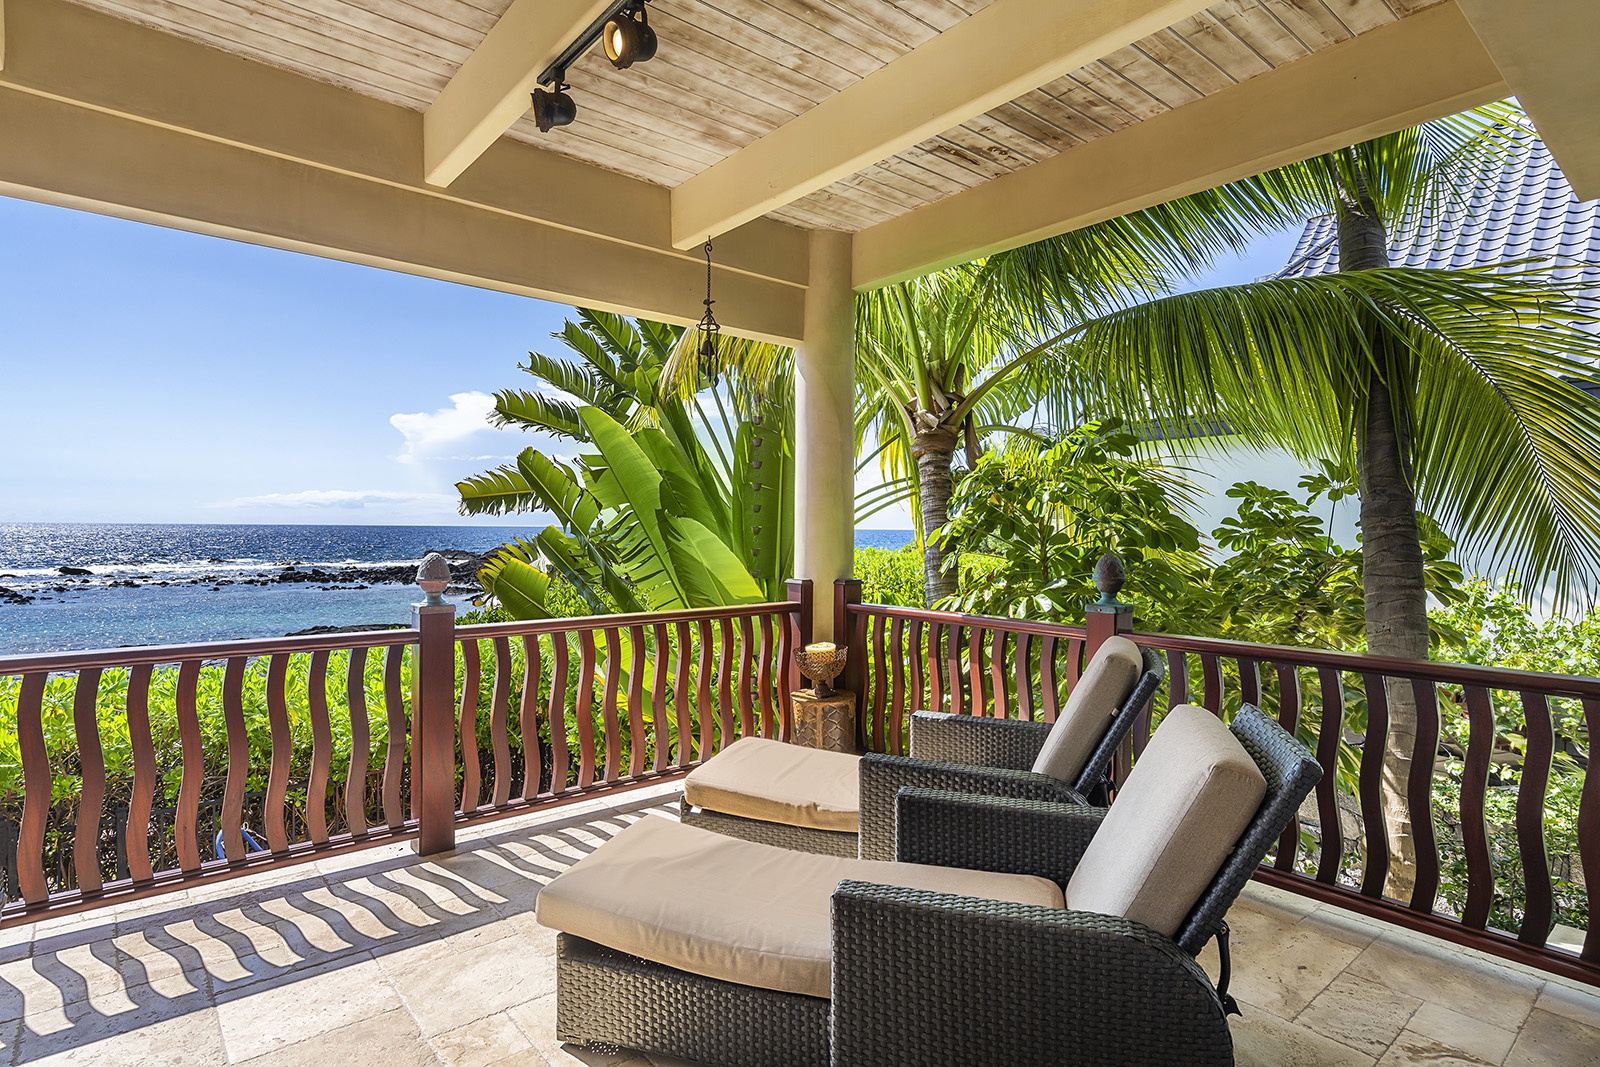 Kailua Kona Vacation Rentals, Mermaid Cove - Lounge as your troubles melt away!